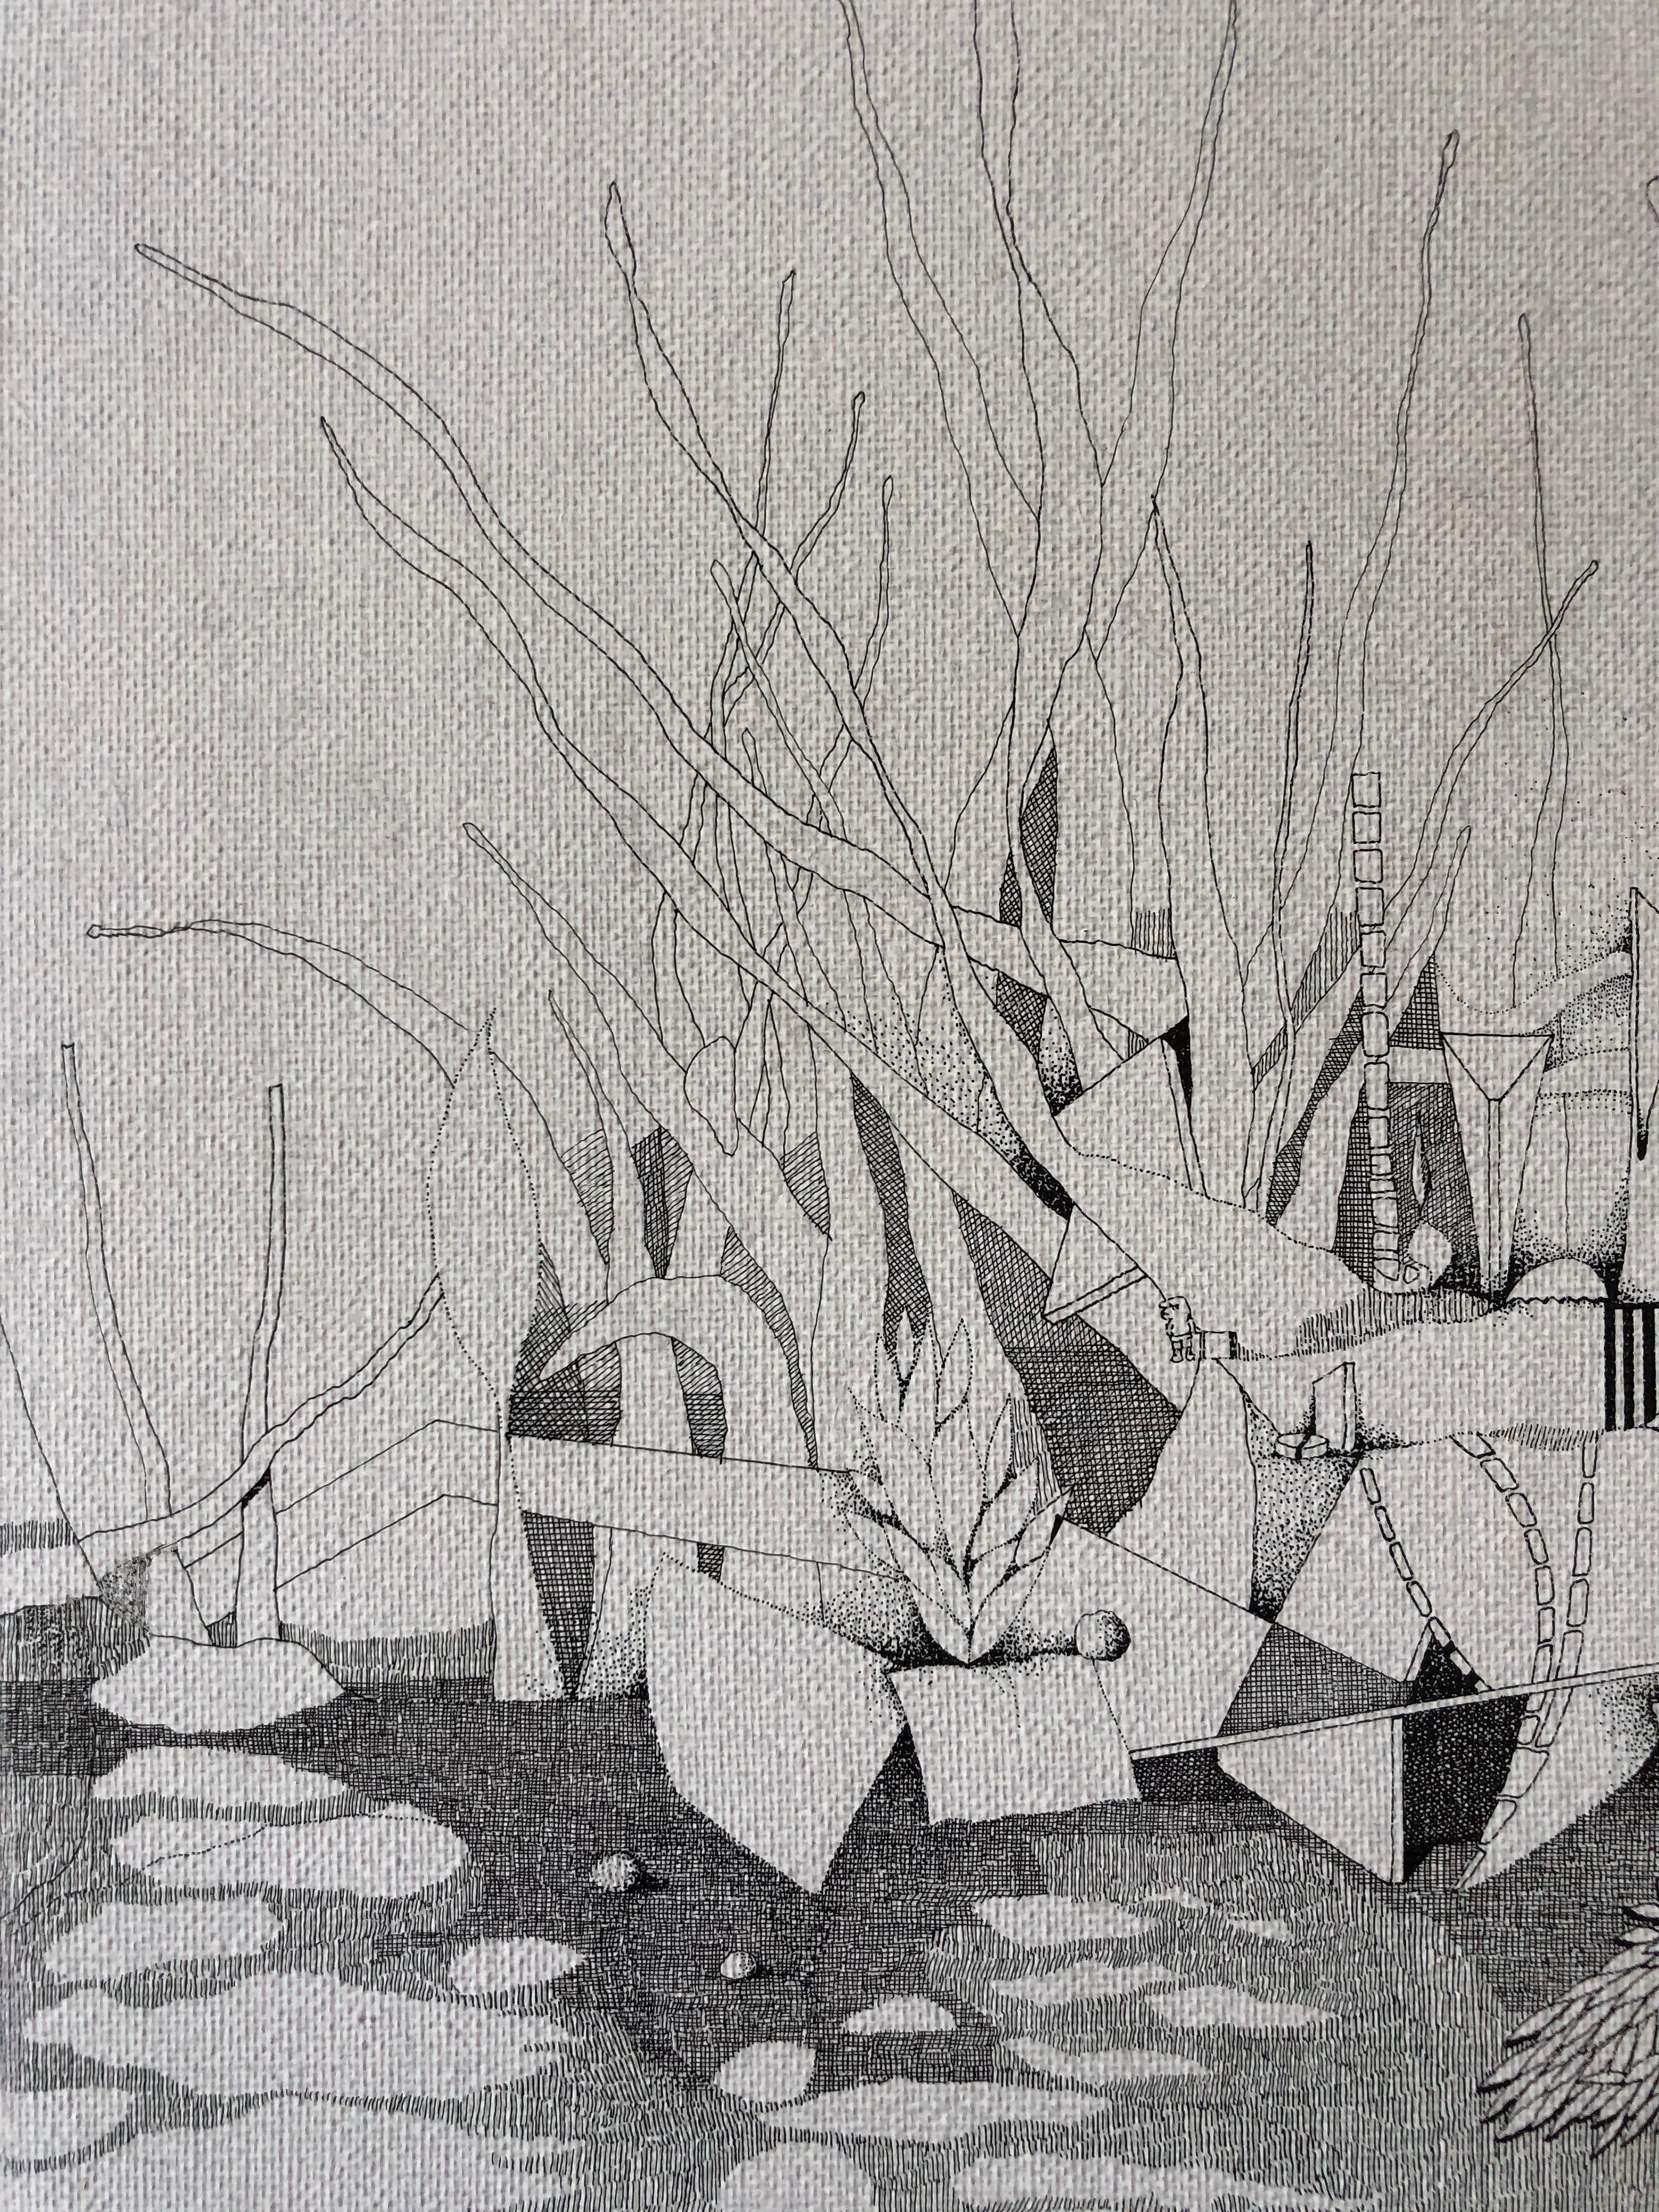 Abstrakte Landschaft - abstraktes Gemälde (Grau), Landscape Painting, von Jacob Elhanani